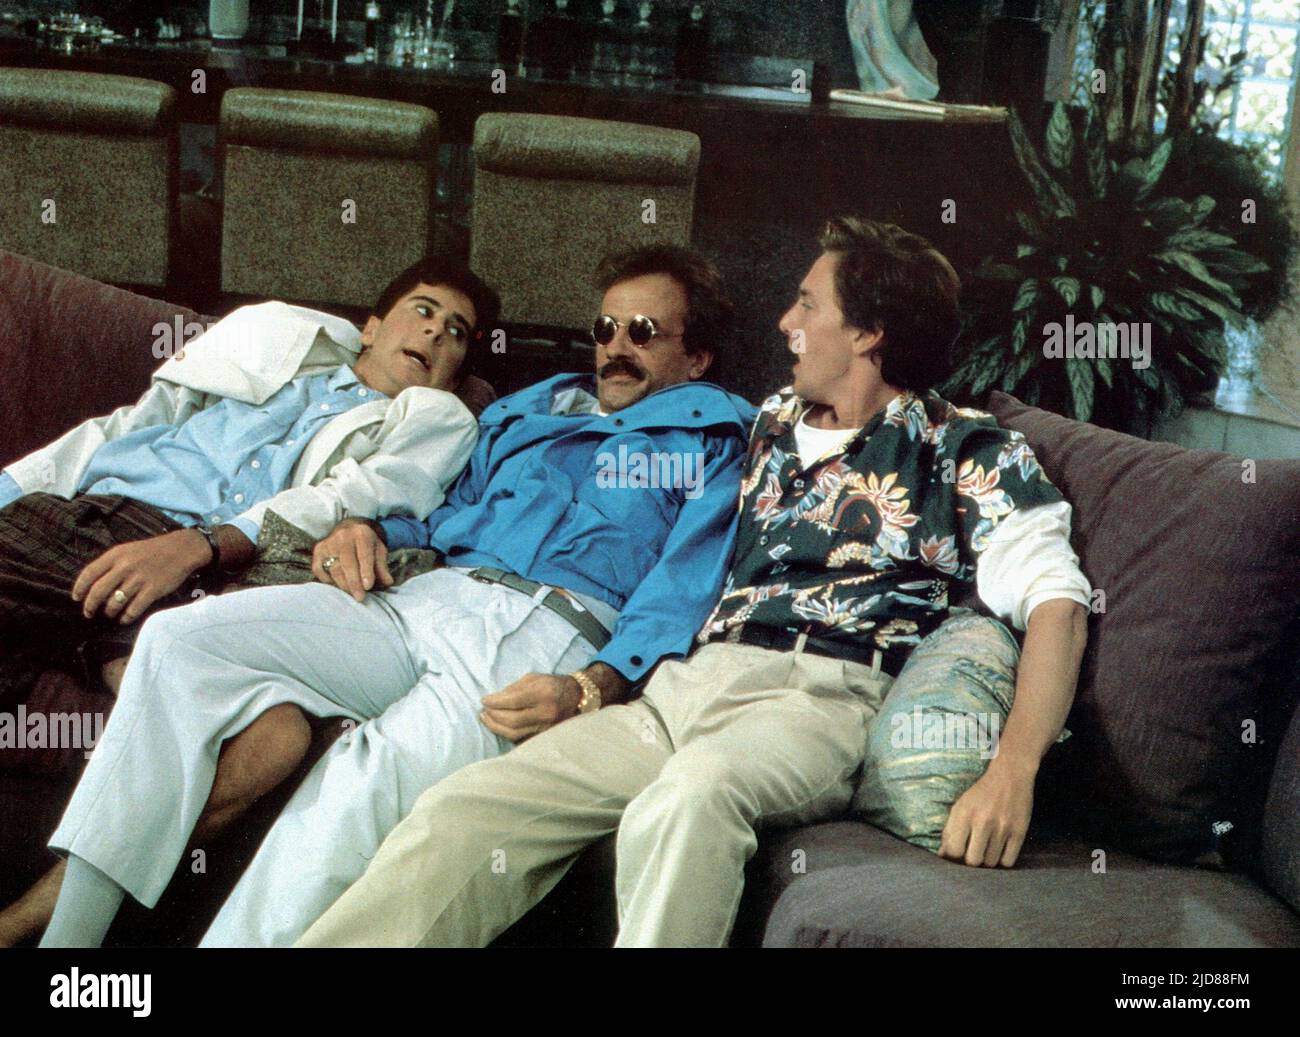 SILVERMAN,KISER,MCCARTHY, WEEKEND AT BERNIE'S, 1989, Stock Photo